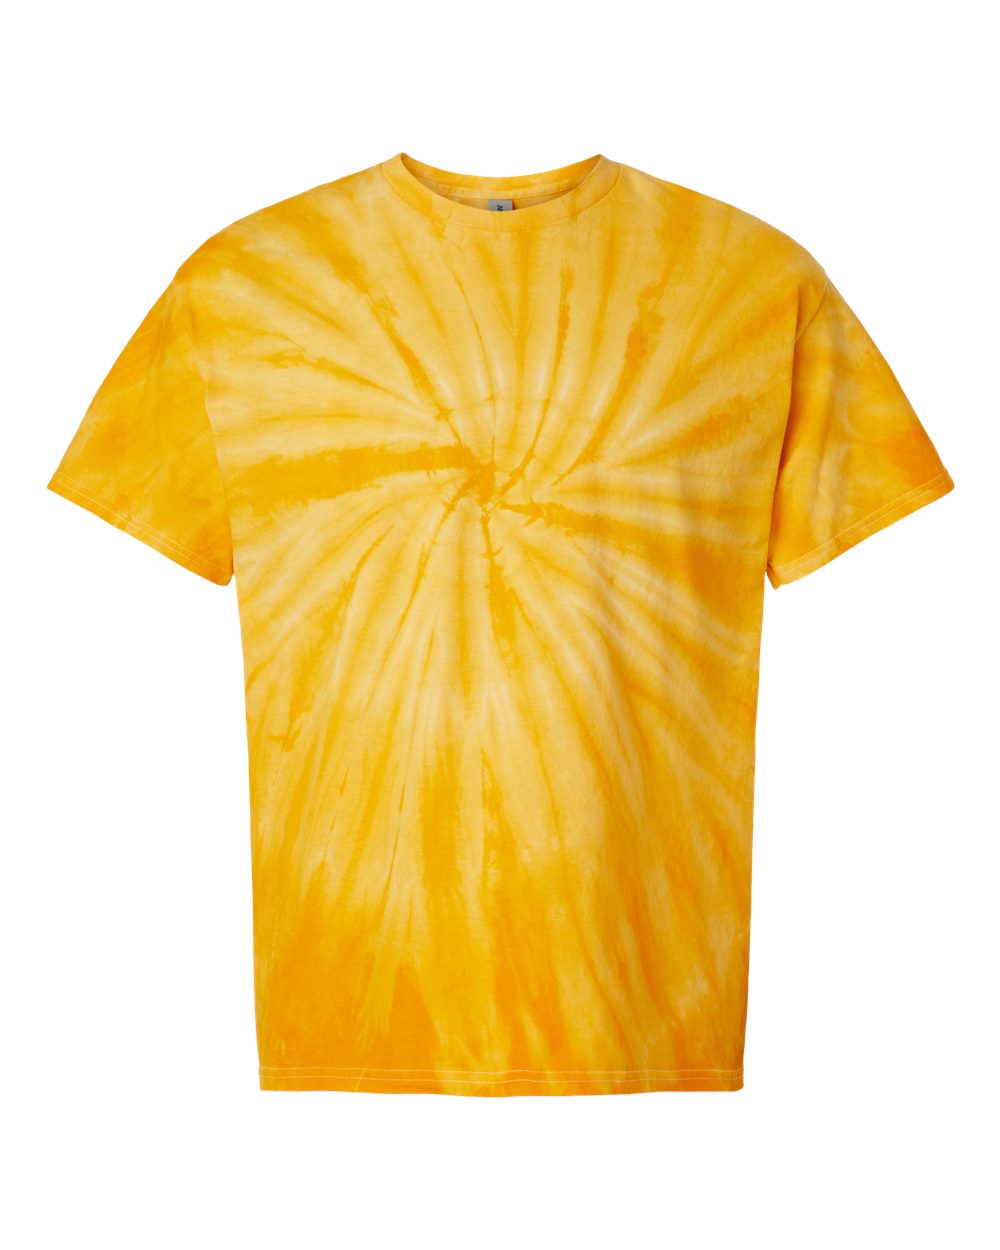 Dyenomite - Cyclone Pinwheel Tie-Dyed T-Shirt - 200CY. S-3XL